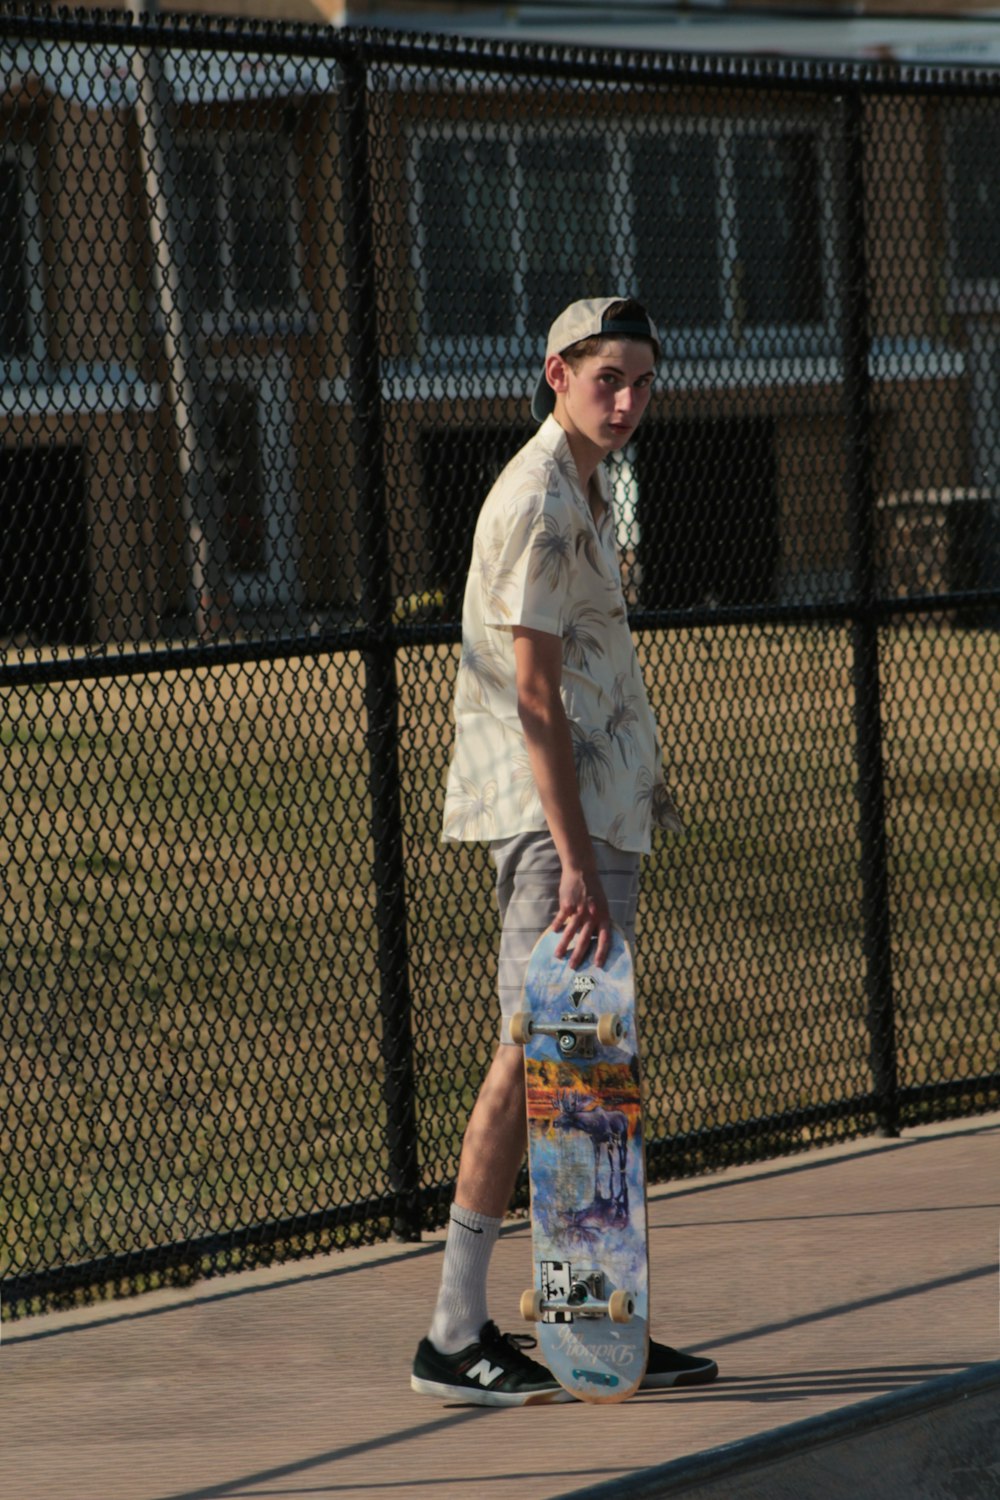 a man holding a skateboard